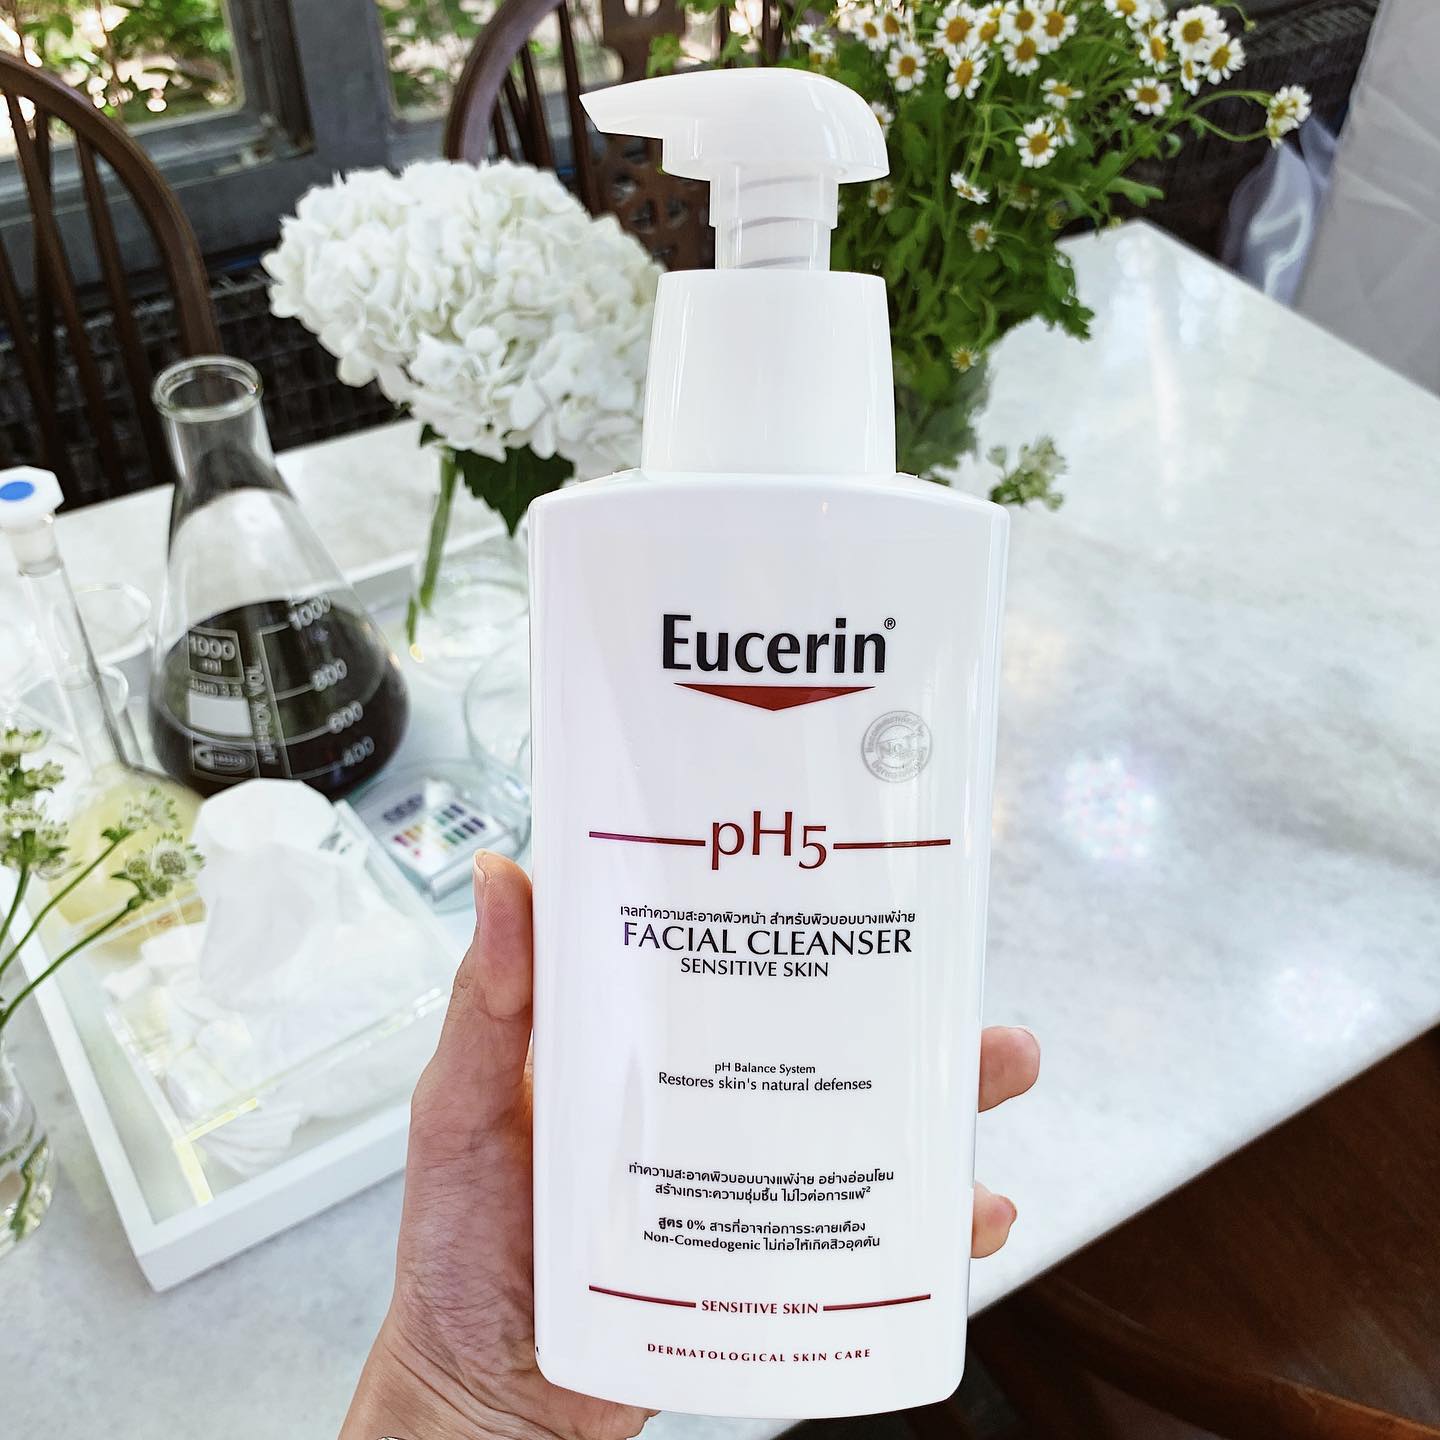 Sữa rửa mặt dược mỹ phẩm Eucerin PH5 Facial Cleanser Sensitive Skin. (Nguồn ảnh: Internet)